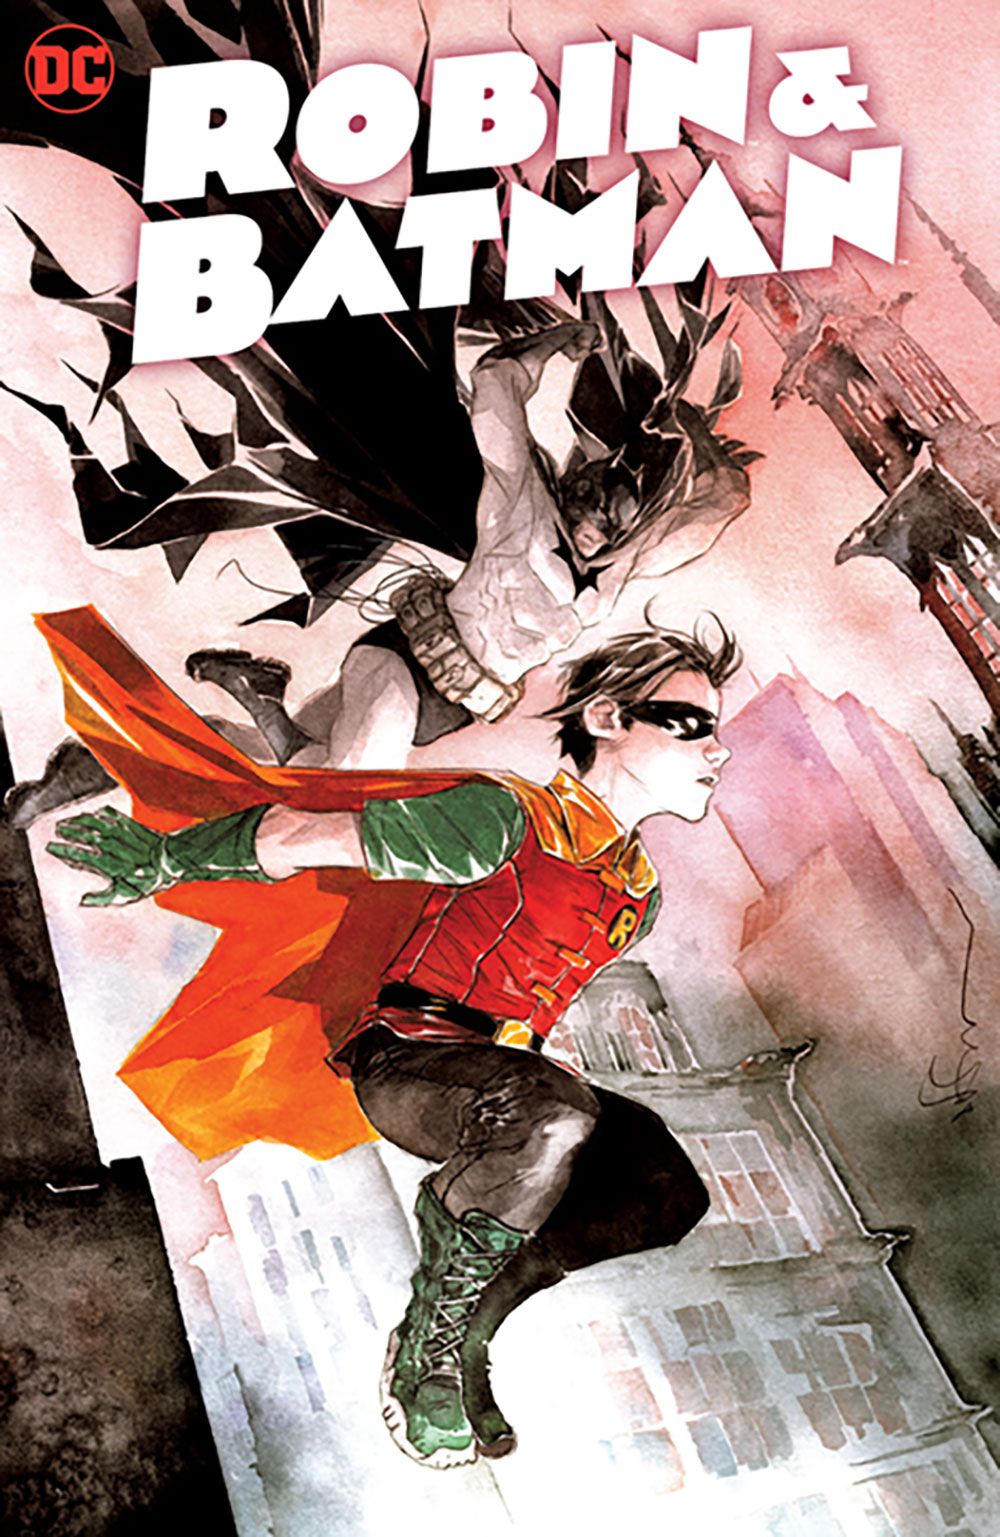 Robin-&-Batman-revised